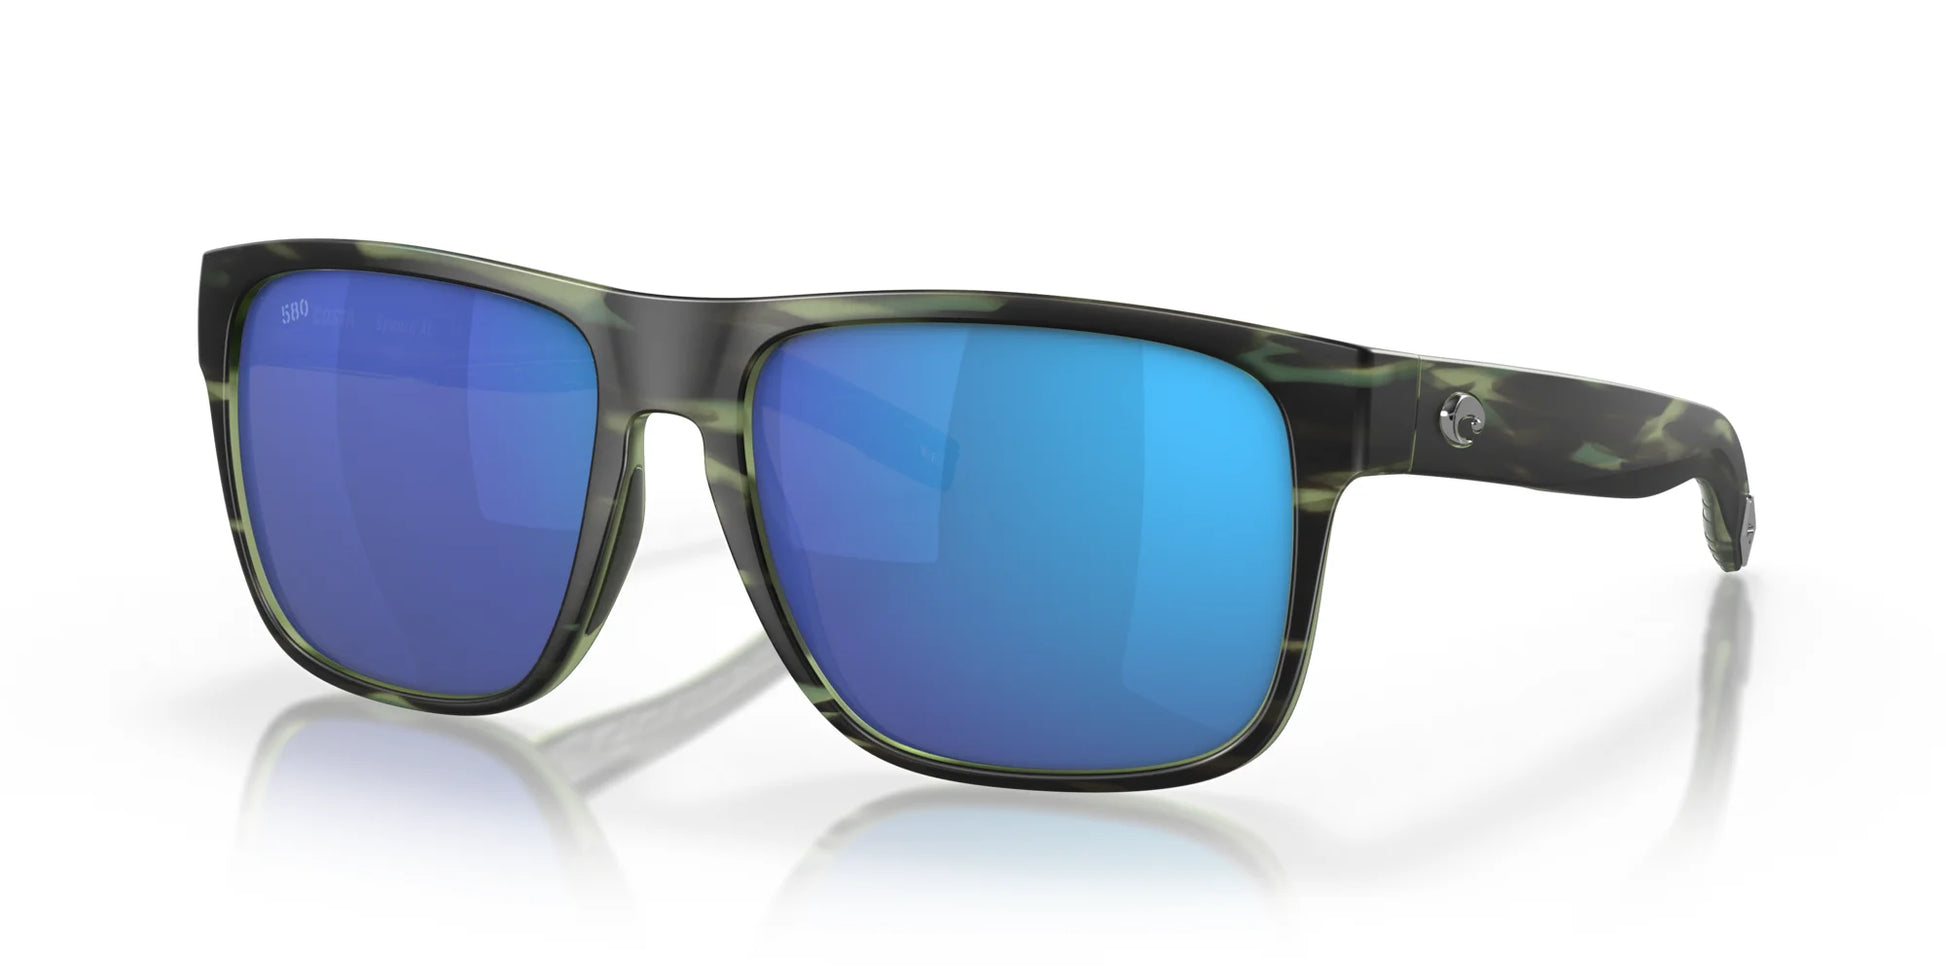 Costa SPEARO XL 6S9013 Sunglasses Matte Reef / Blue Mirror